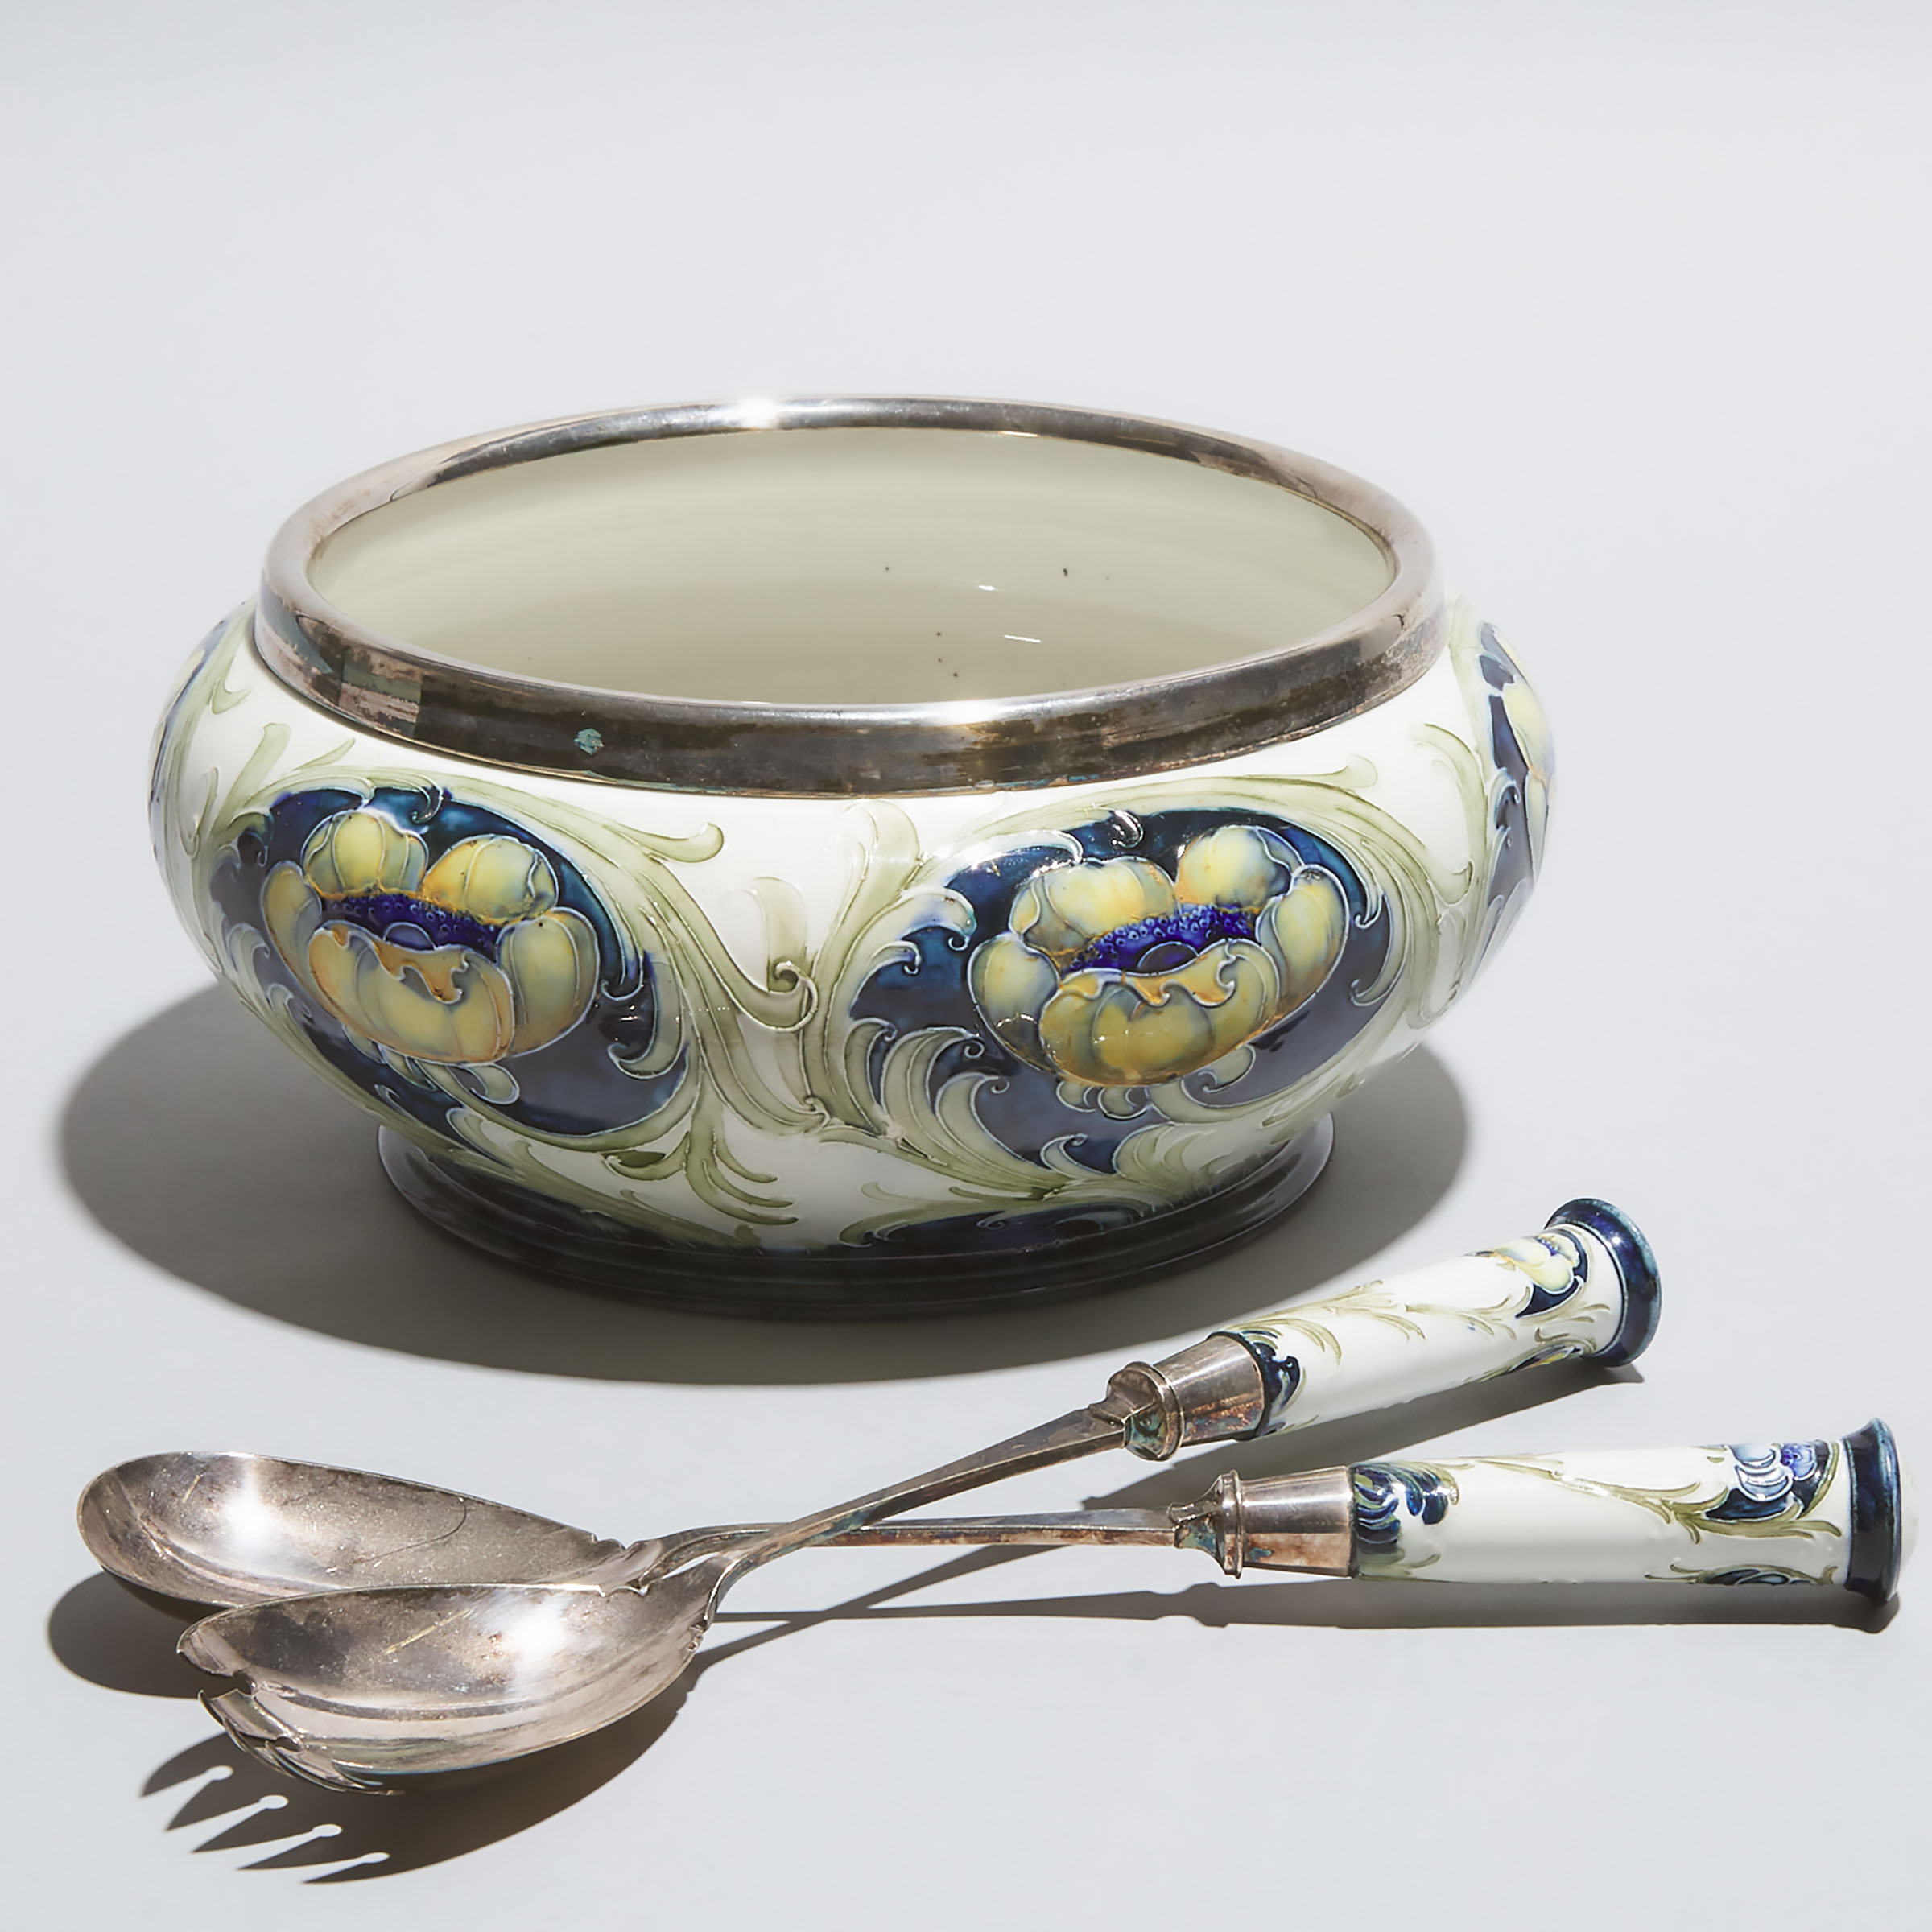 Macintyre Moorcroft Florian Salad Bowl, c.1902-05